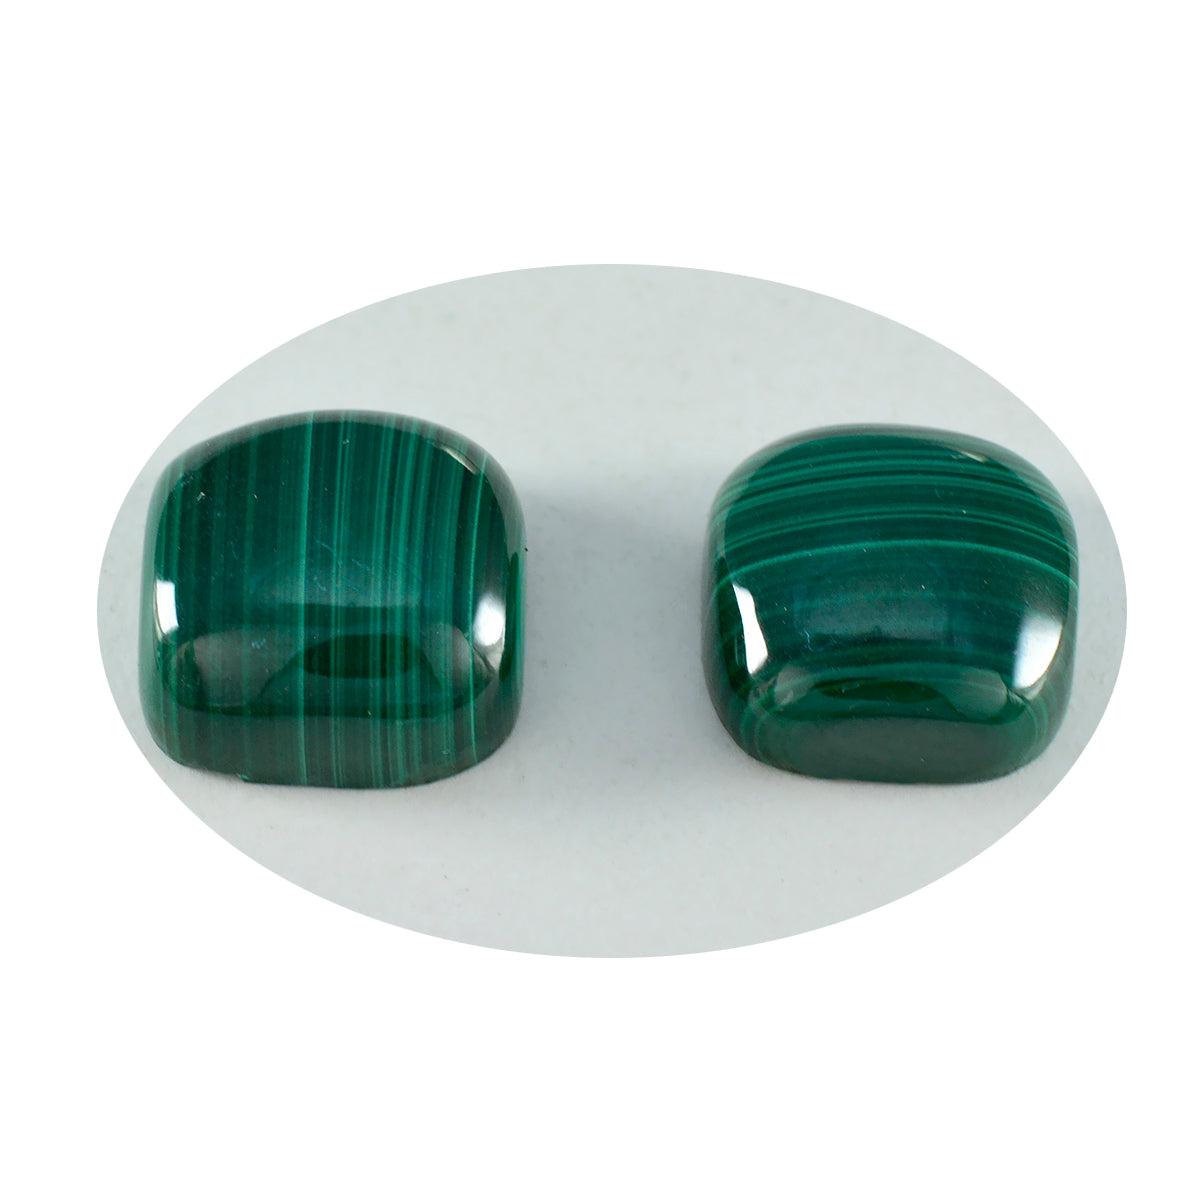 riyogems 1pc グリーン マラカイト カボション 11x11 mm クッション形状の素晴らしい品質のルース宝石